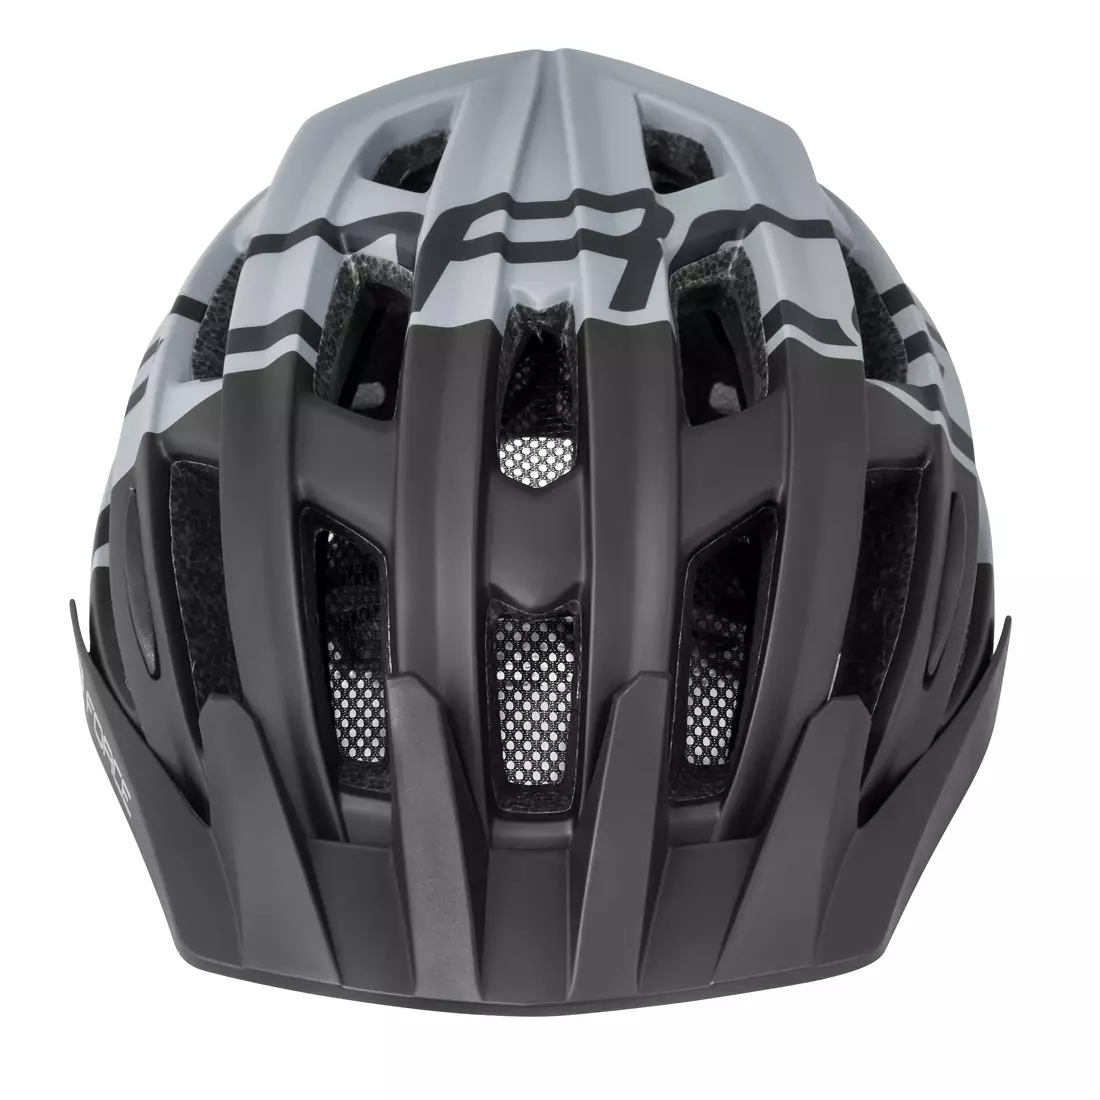 FORCE cyklistická helma CORELLA black gray